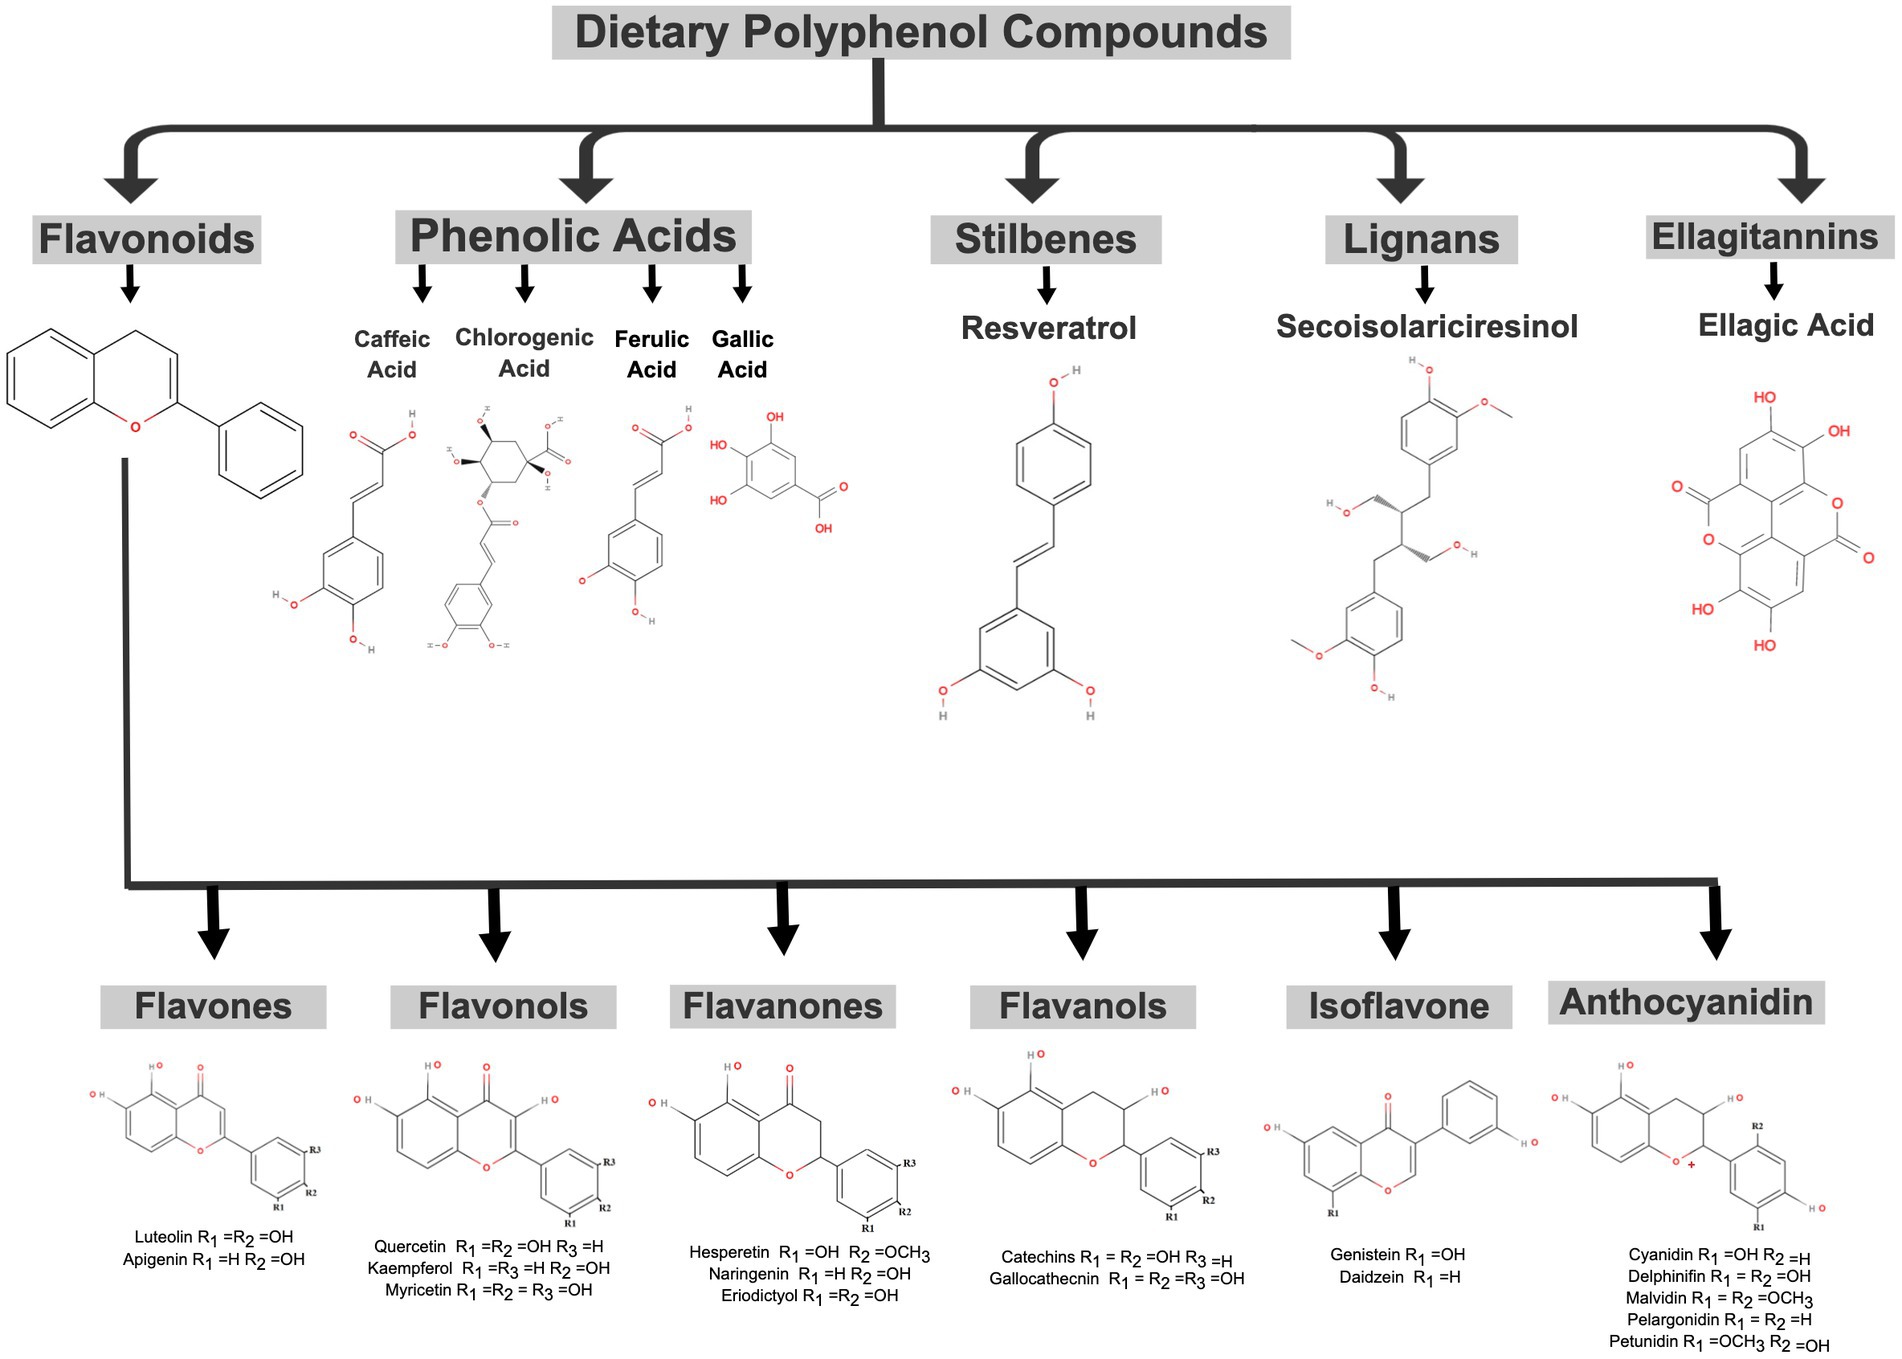 Full article: Food-grade encapsulated polyphenols: recent advances